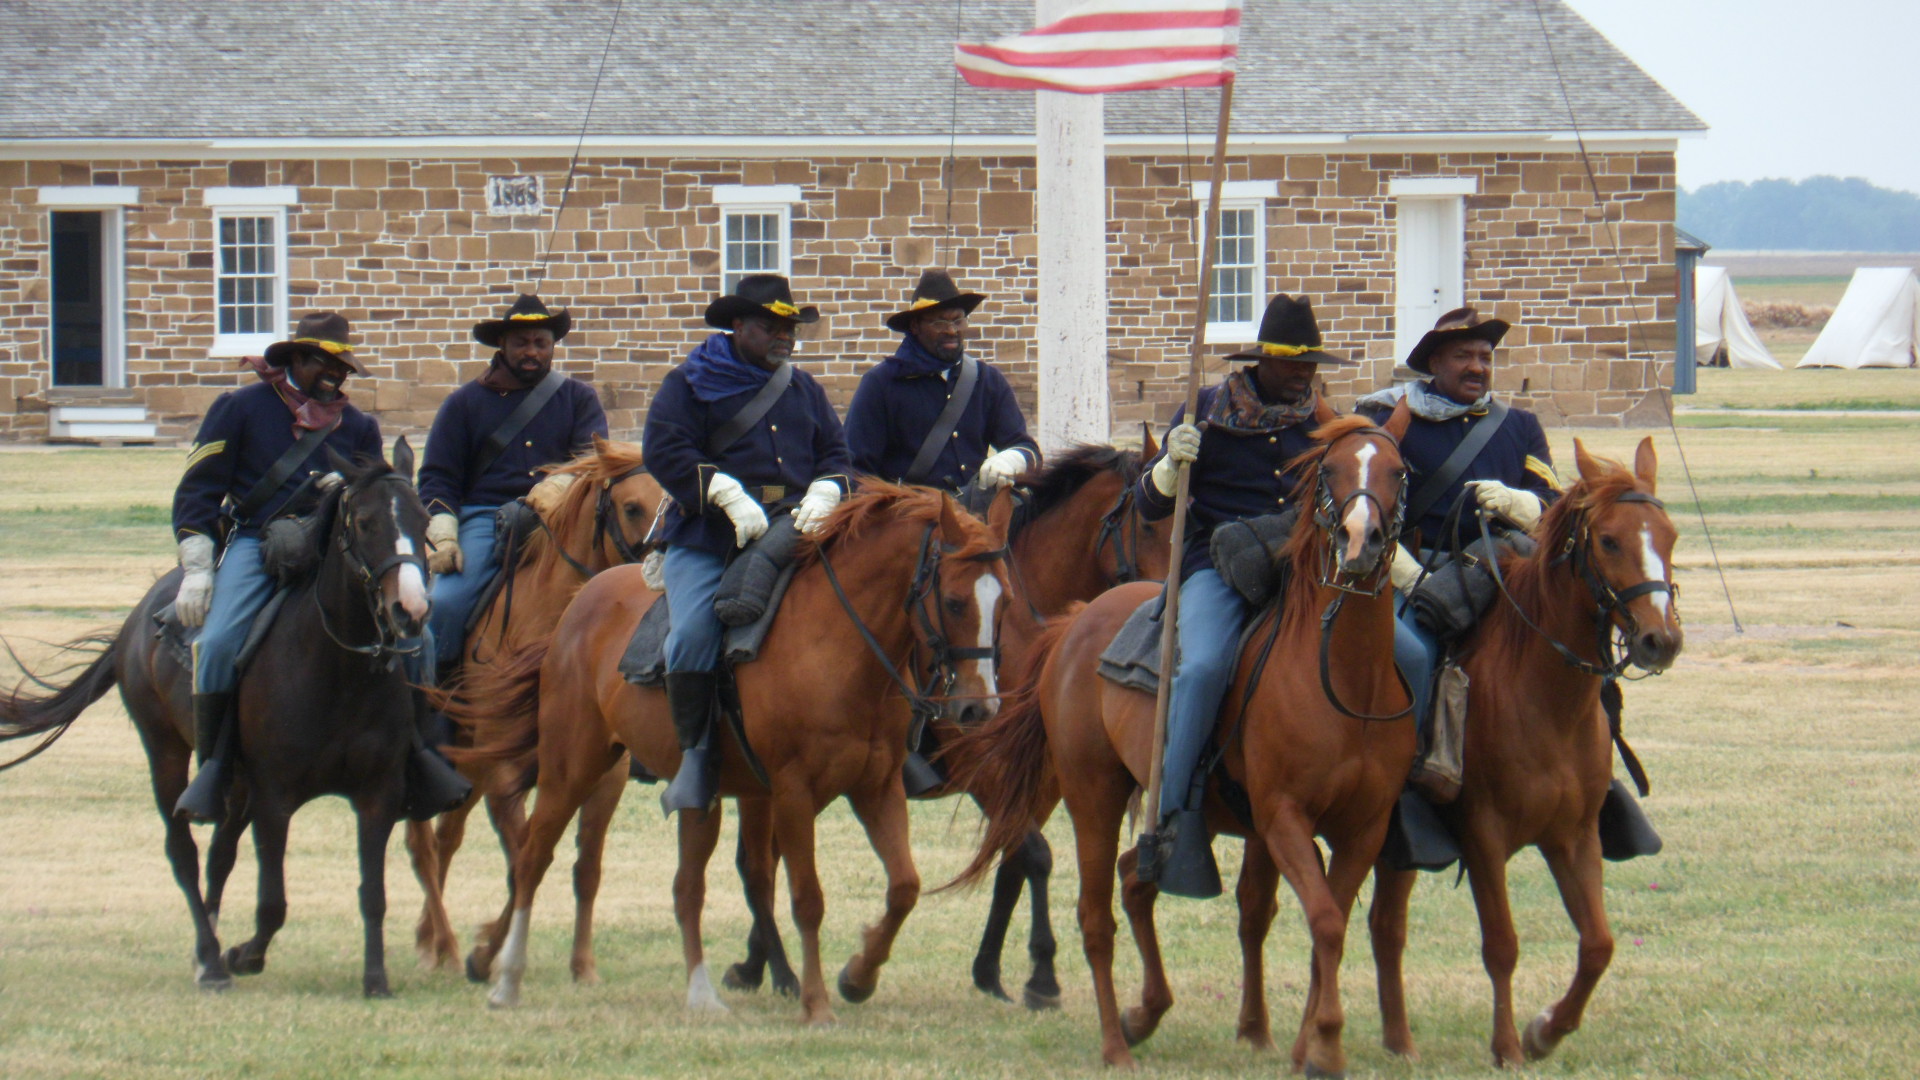 African American men in 19th century cavalry uniforms on horseback.